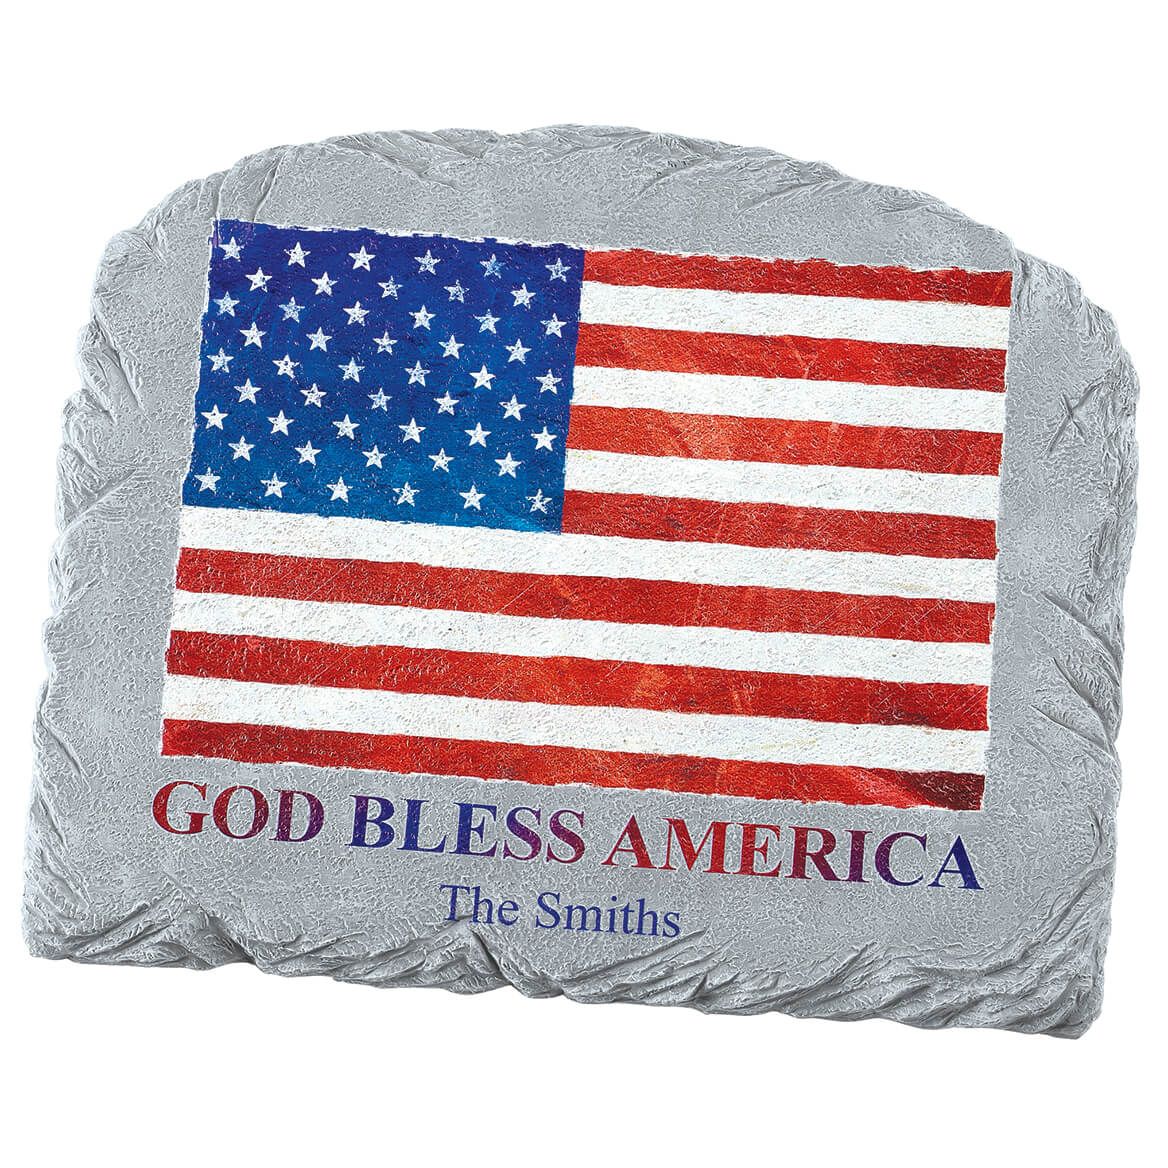 Personalized God Bless America Flag Garden Stone + '-' + 371658